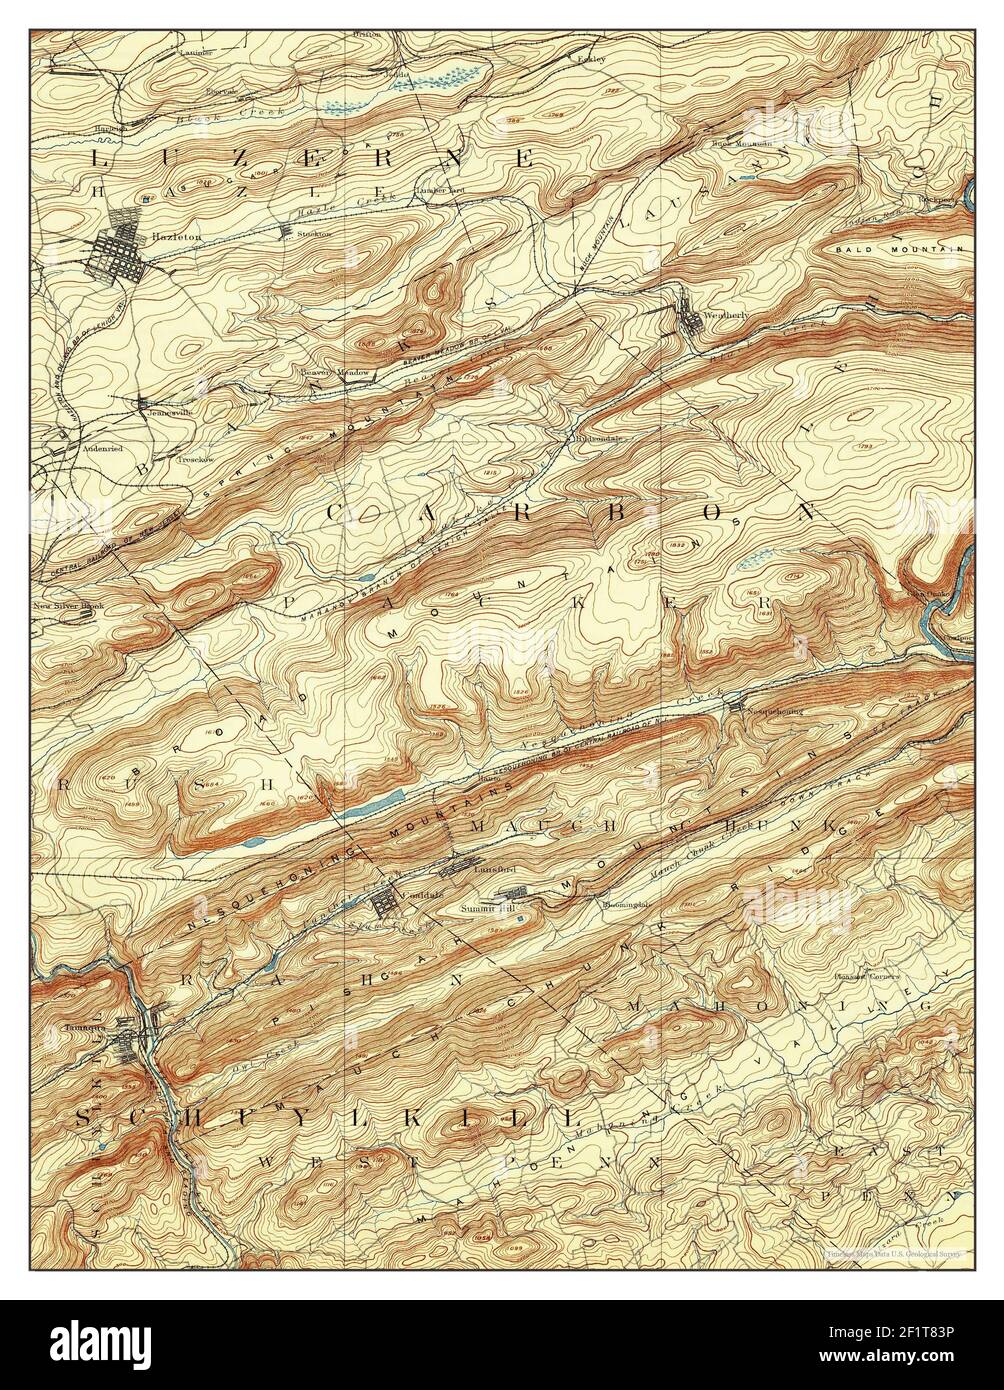 Hazleton, Pennsylvania, map 1893, 1:62500, United States of America by Timeless Maps, data U.S. Geological Survey Stock Photo